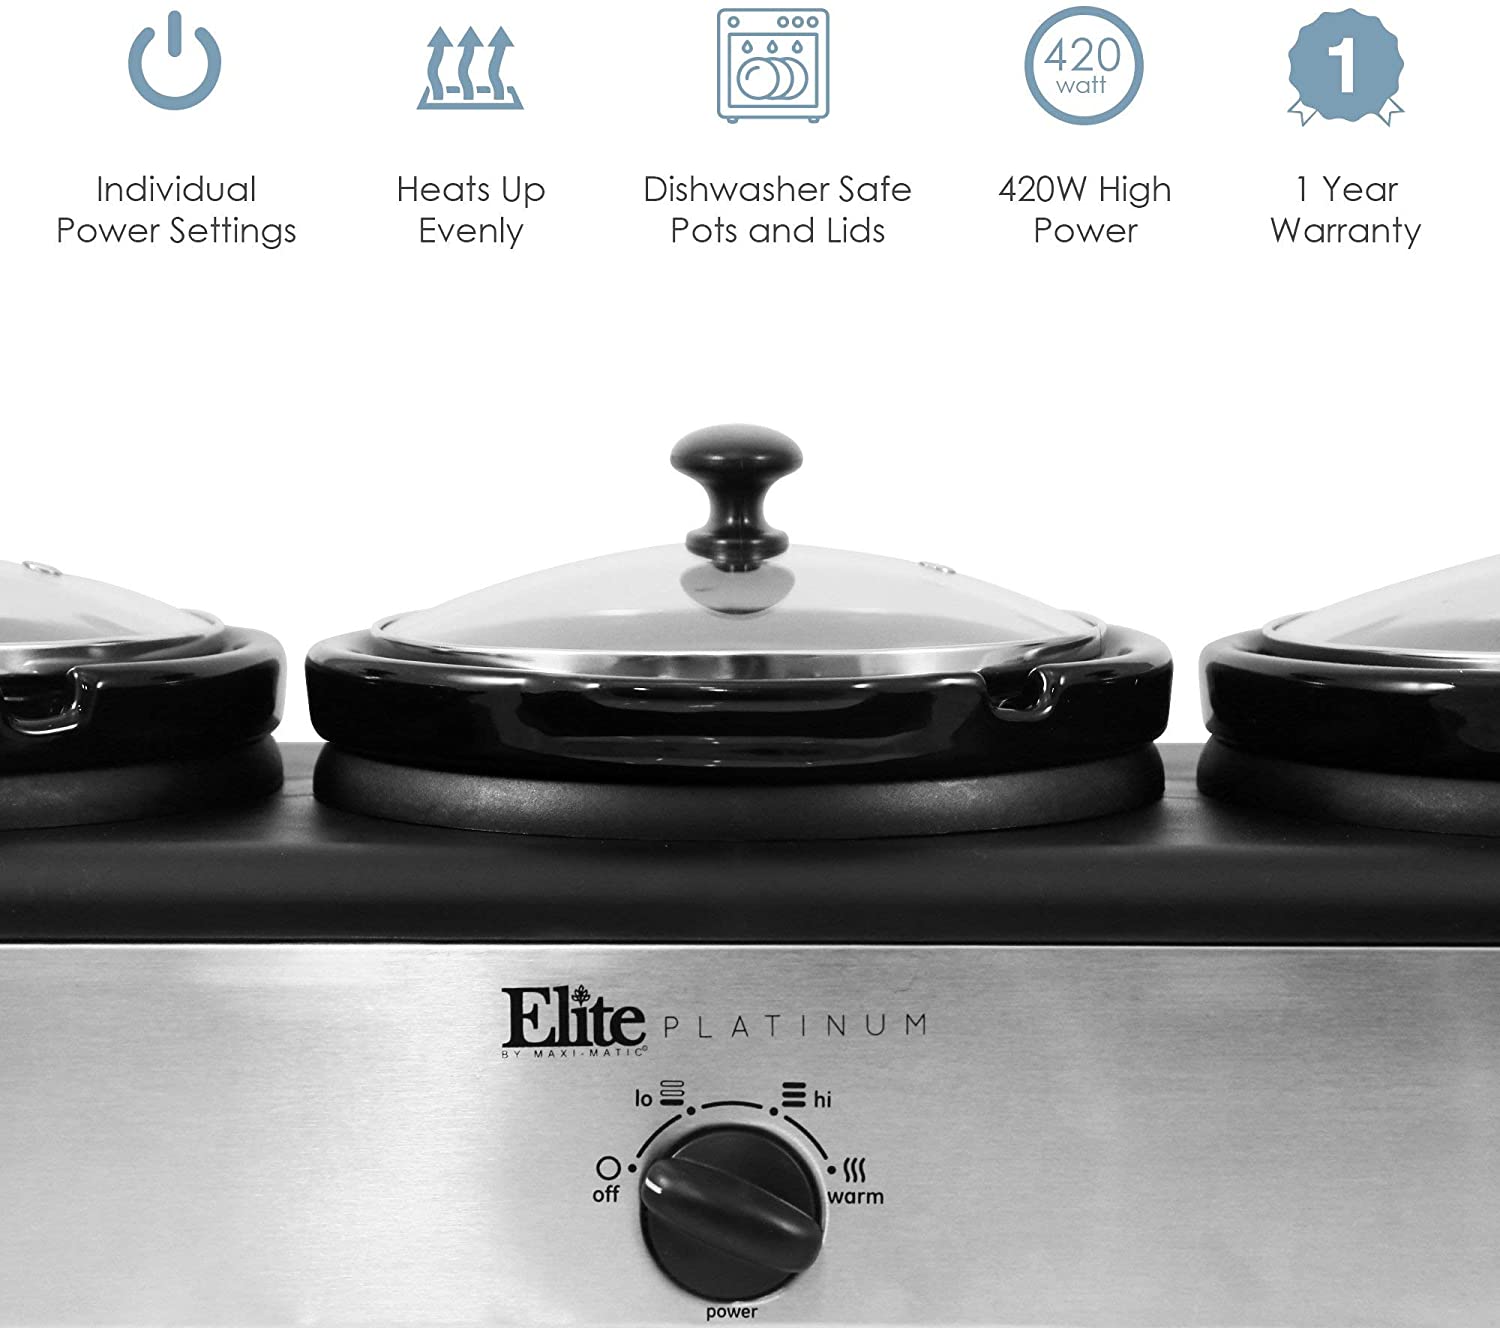 https://kitchenteller.com/wp-content/uploads/2021/05/Elite-Platinum-Maxi-Matic-Triple-Slow-Cooker-Buffet-Server-review-product-close-up.jpg